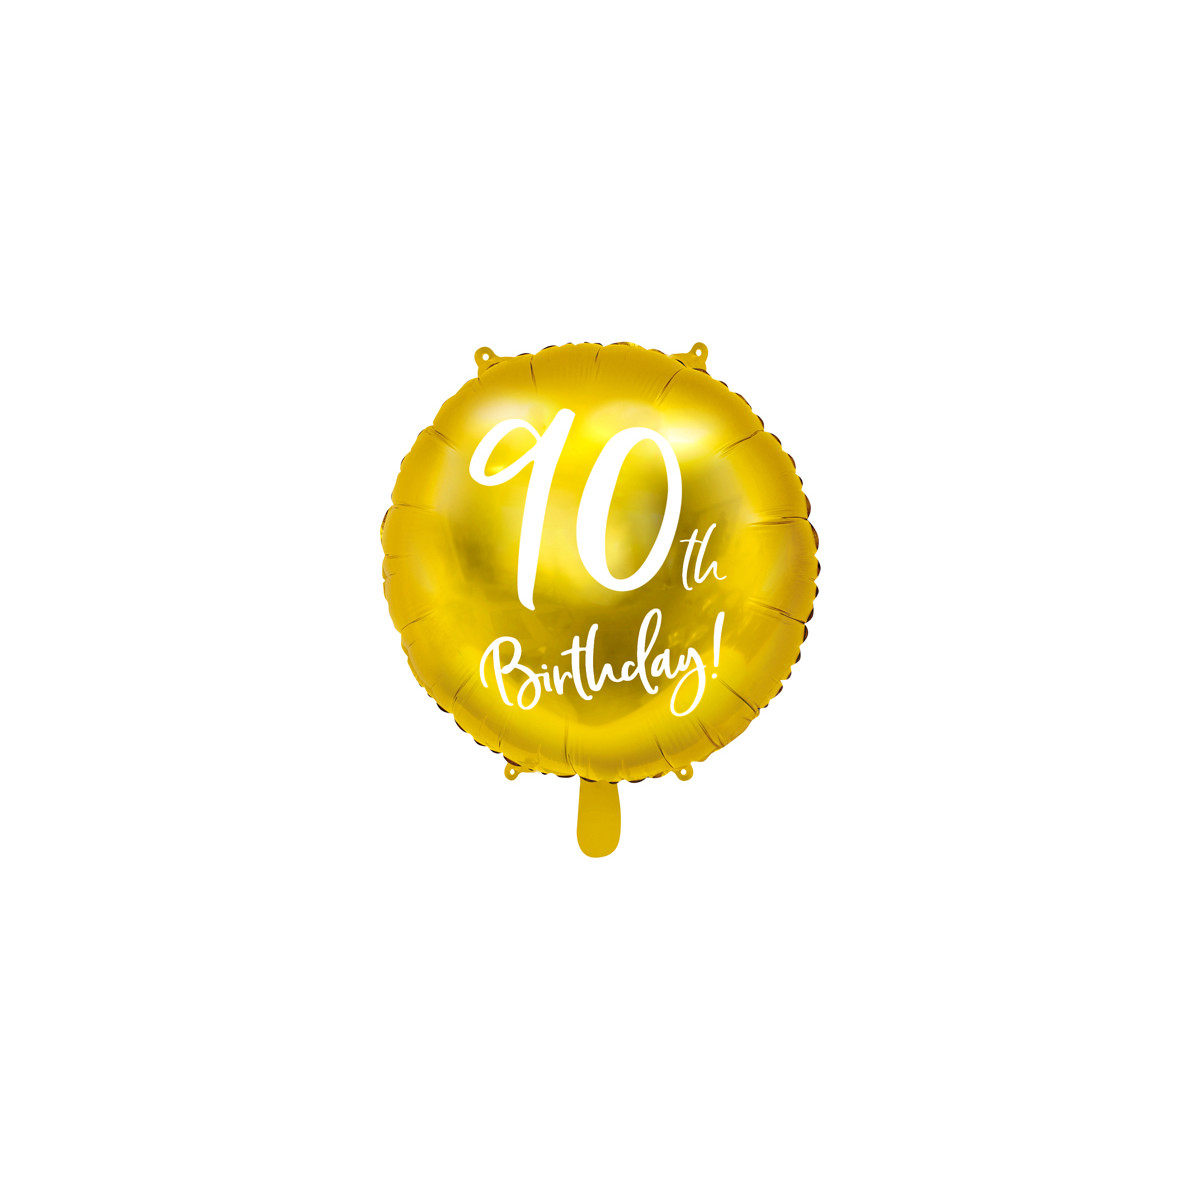 Ballon Anniversaire jaune gold 90 ans